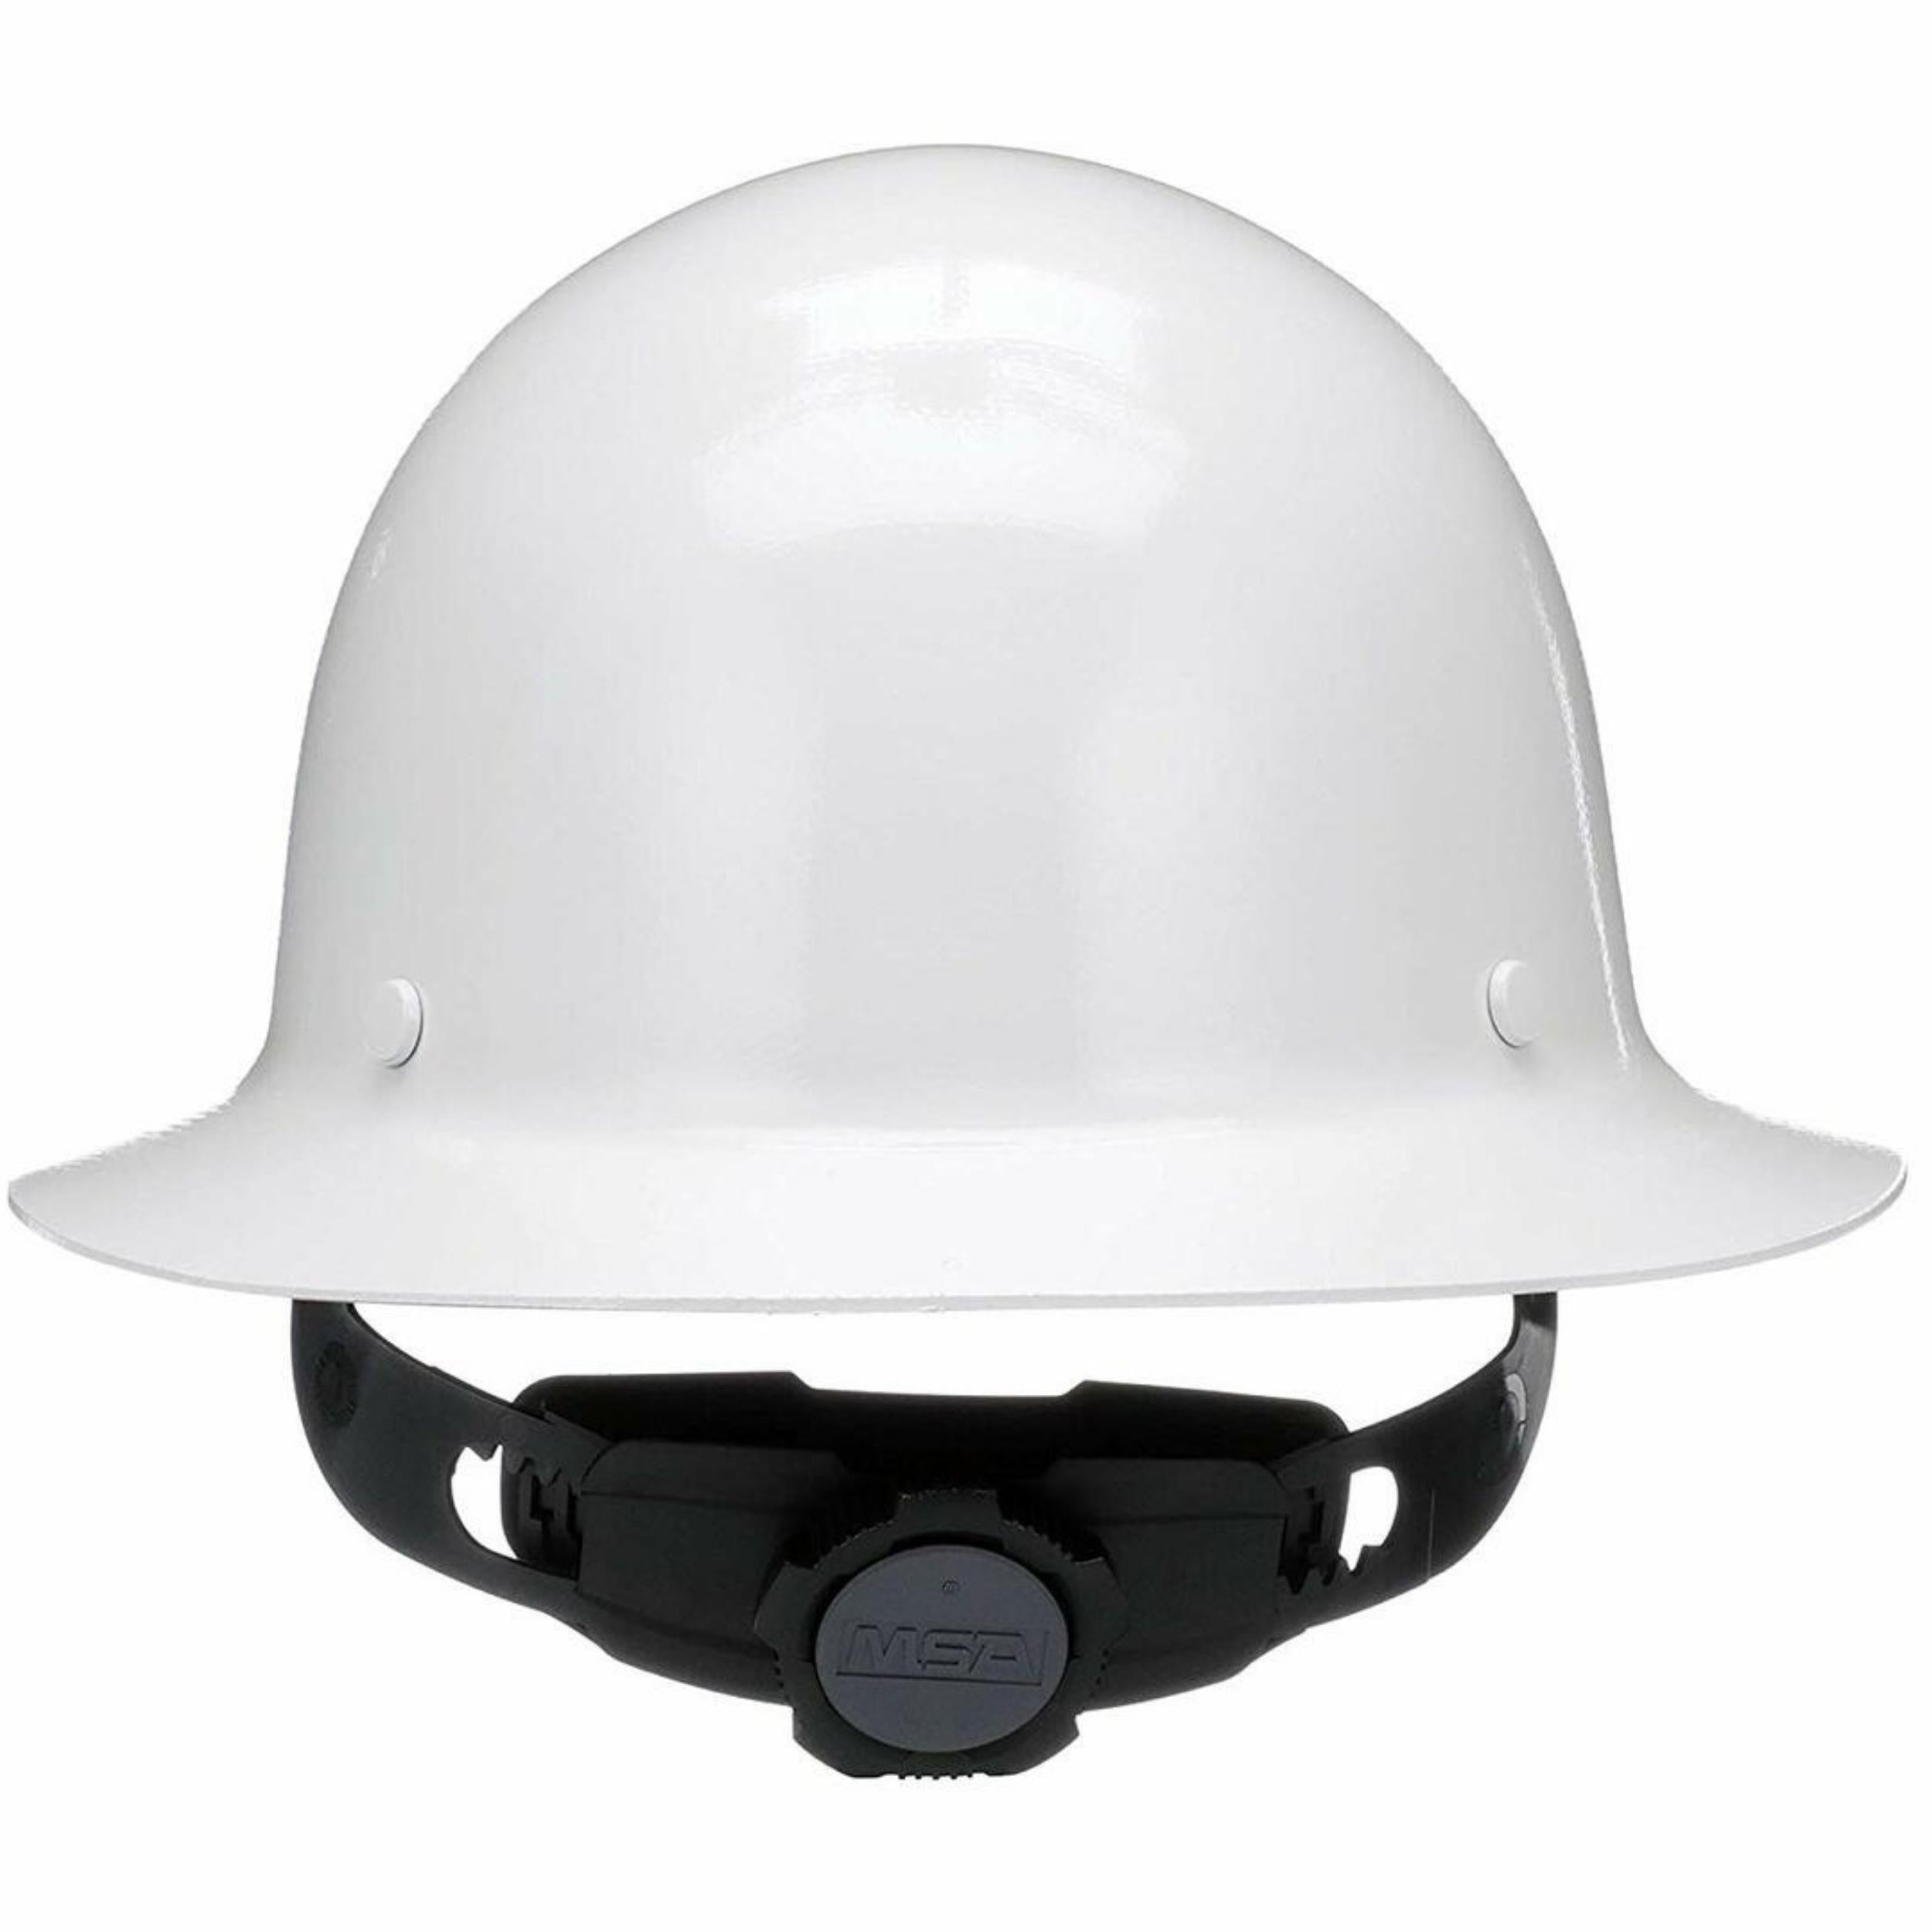 Skullgard Protective Hat White - 475408 W/ Fas-Trac III Suspension, Standard